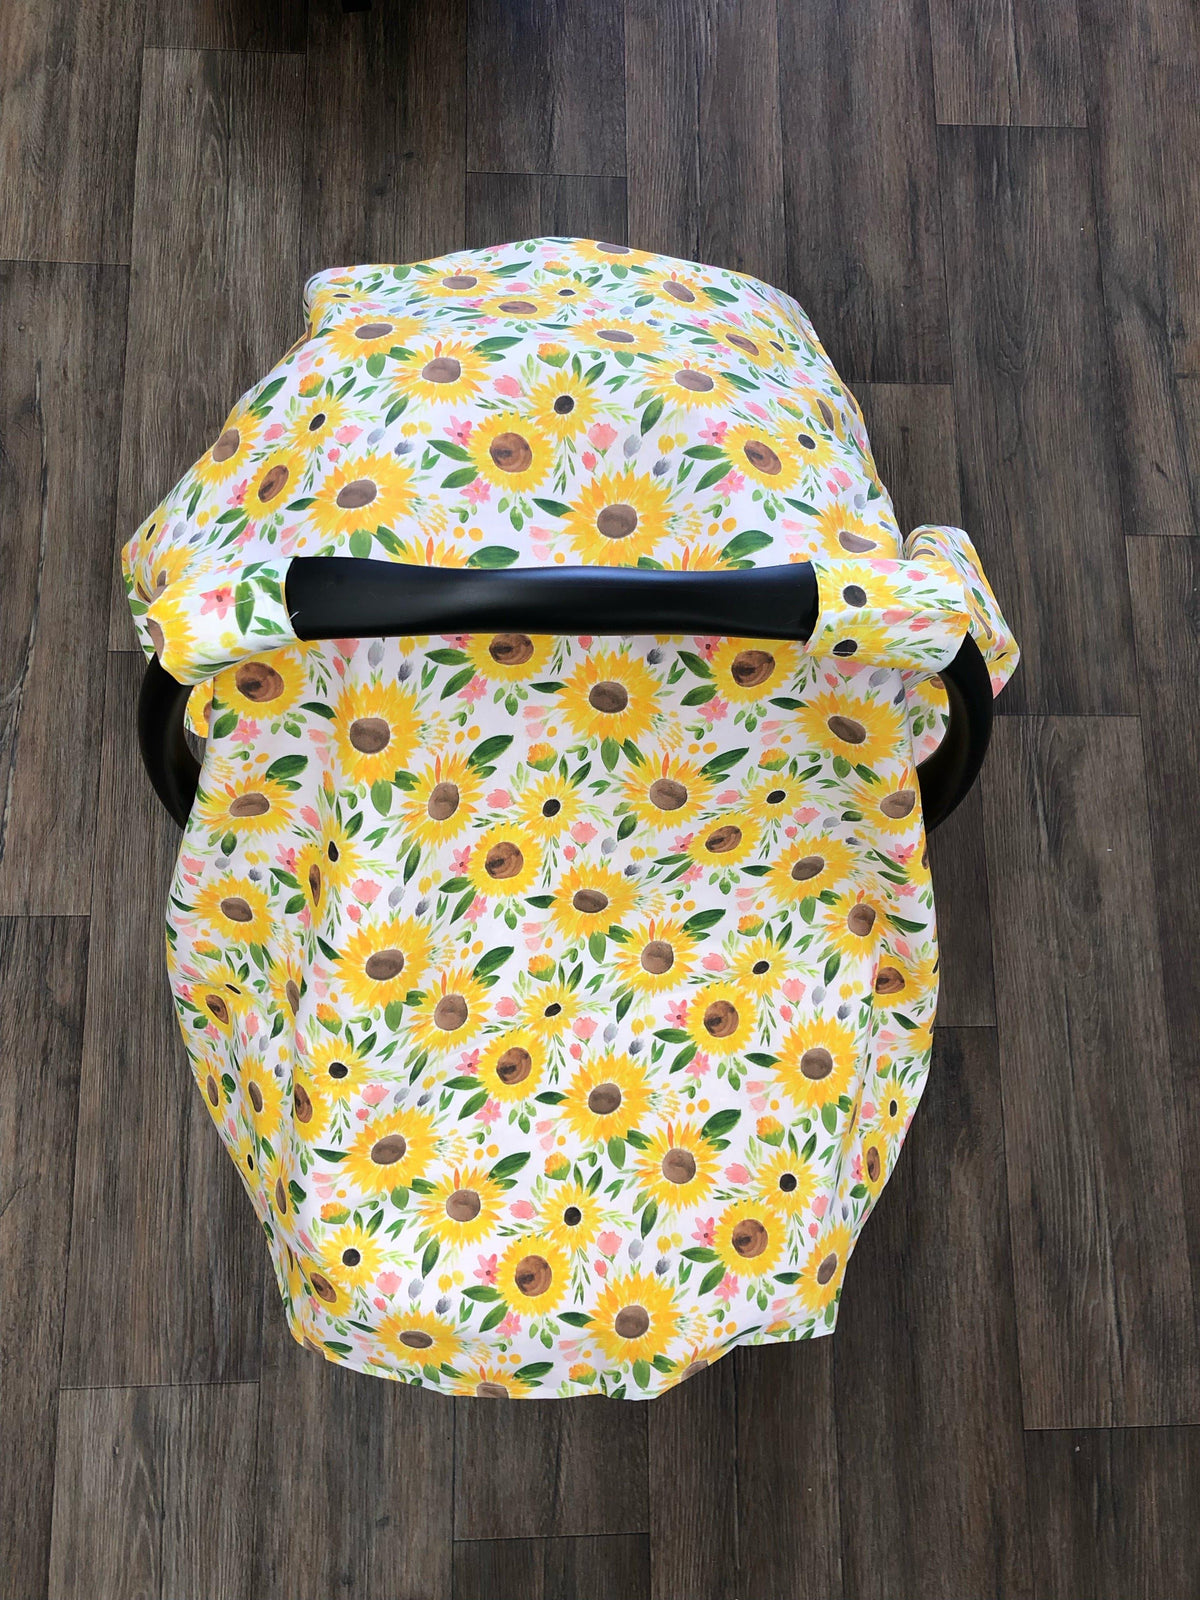 Custom Carseat tent - Sunflowers - DBC Baby Bedding Co 